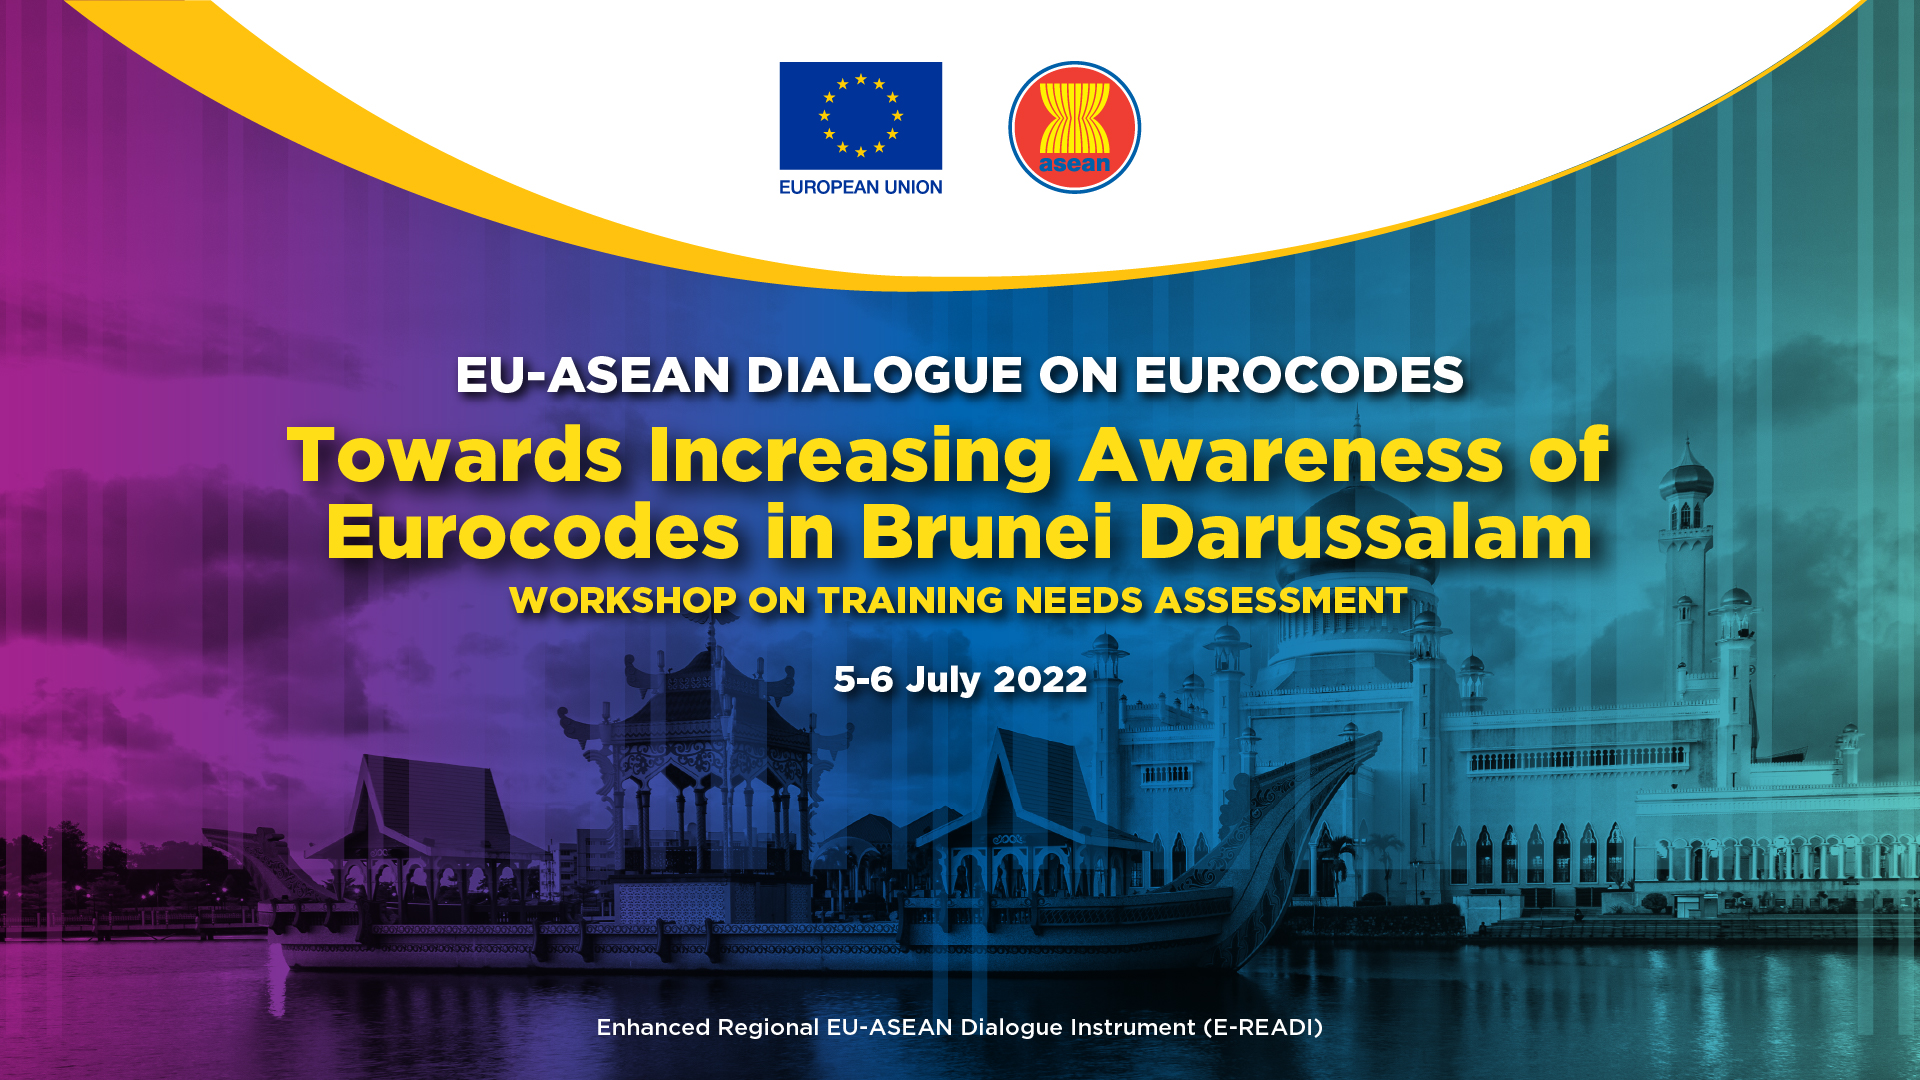 Eurocodes training needs assessment workshop Brunei